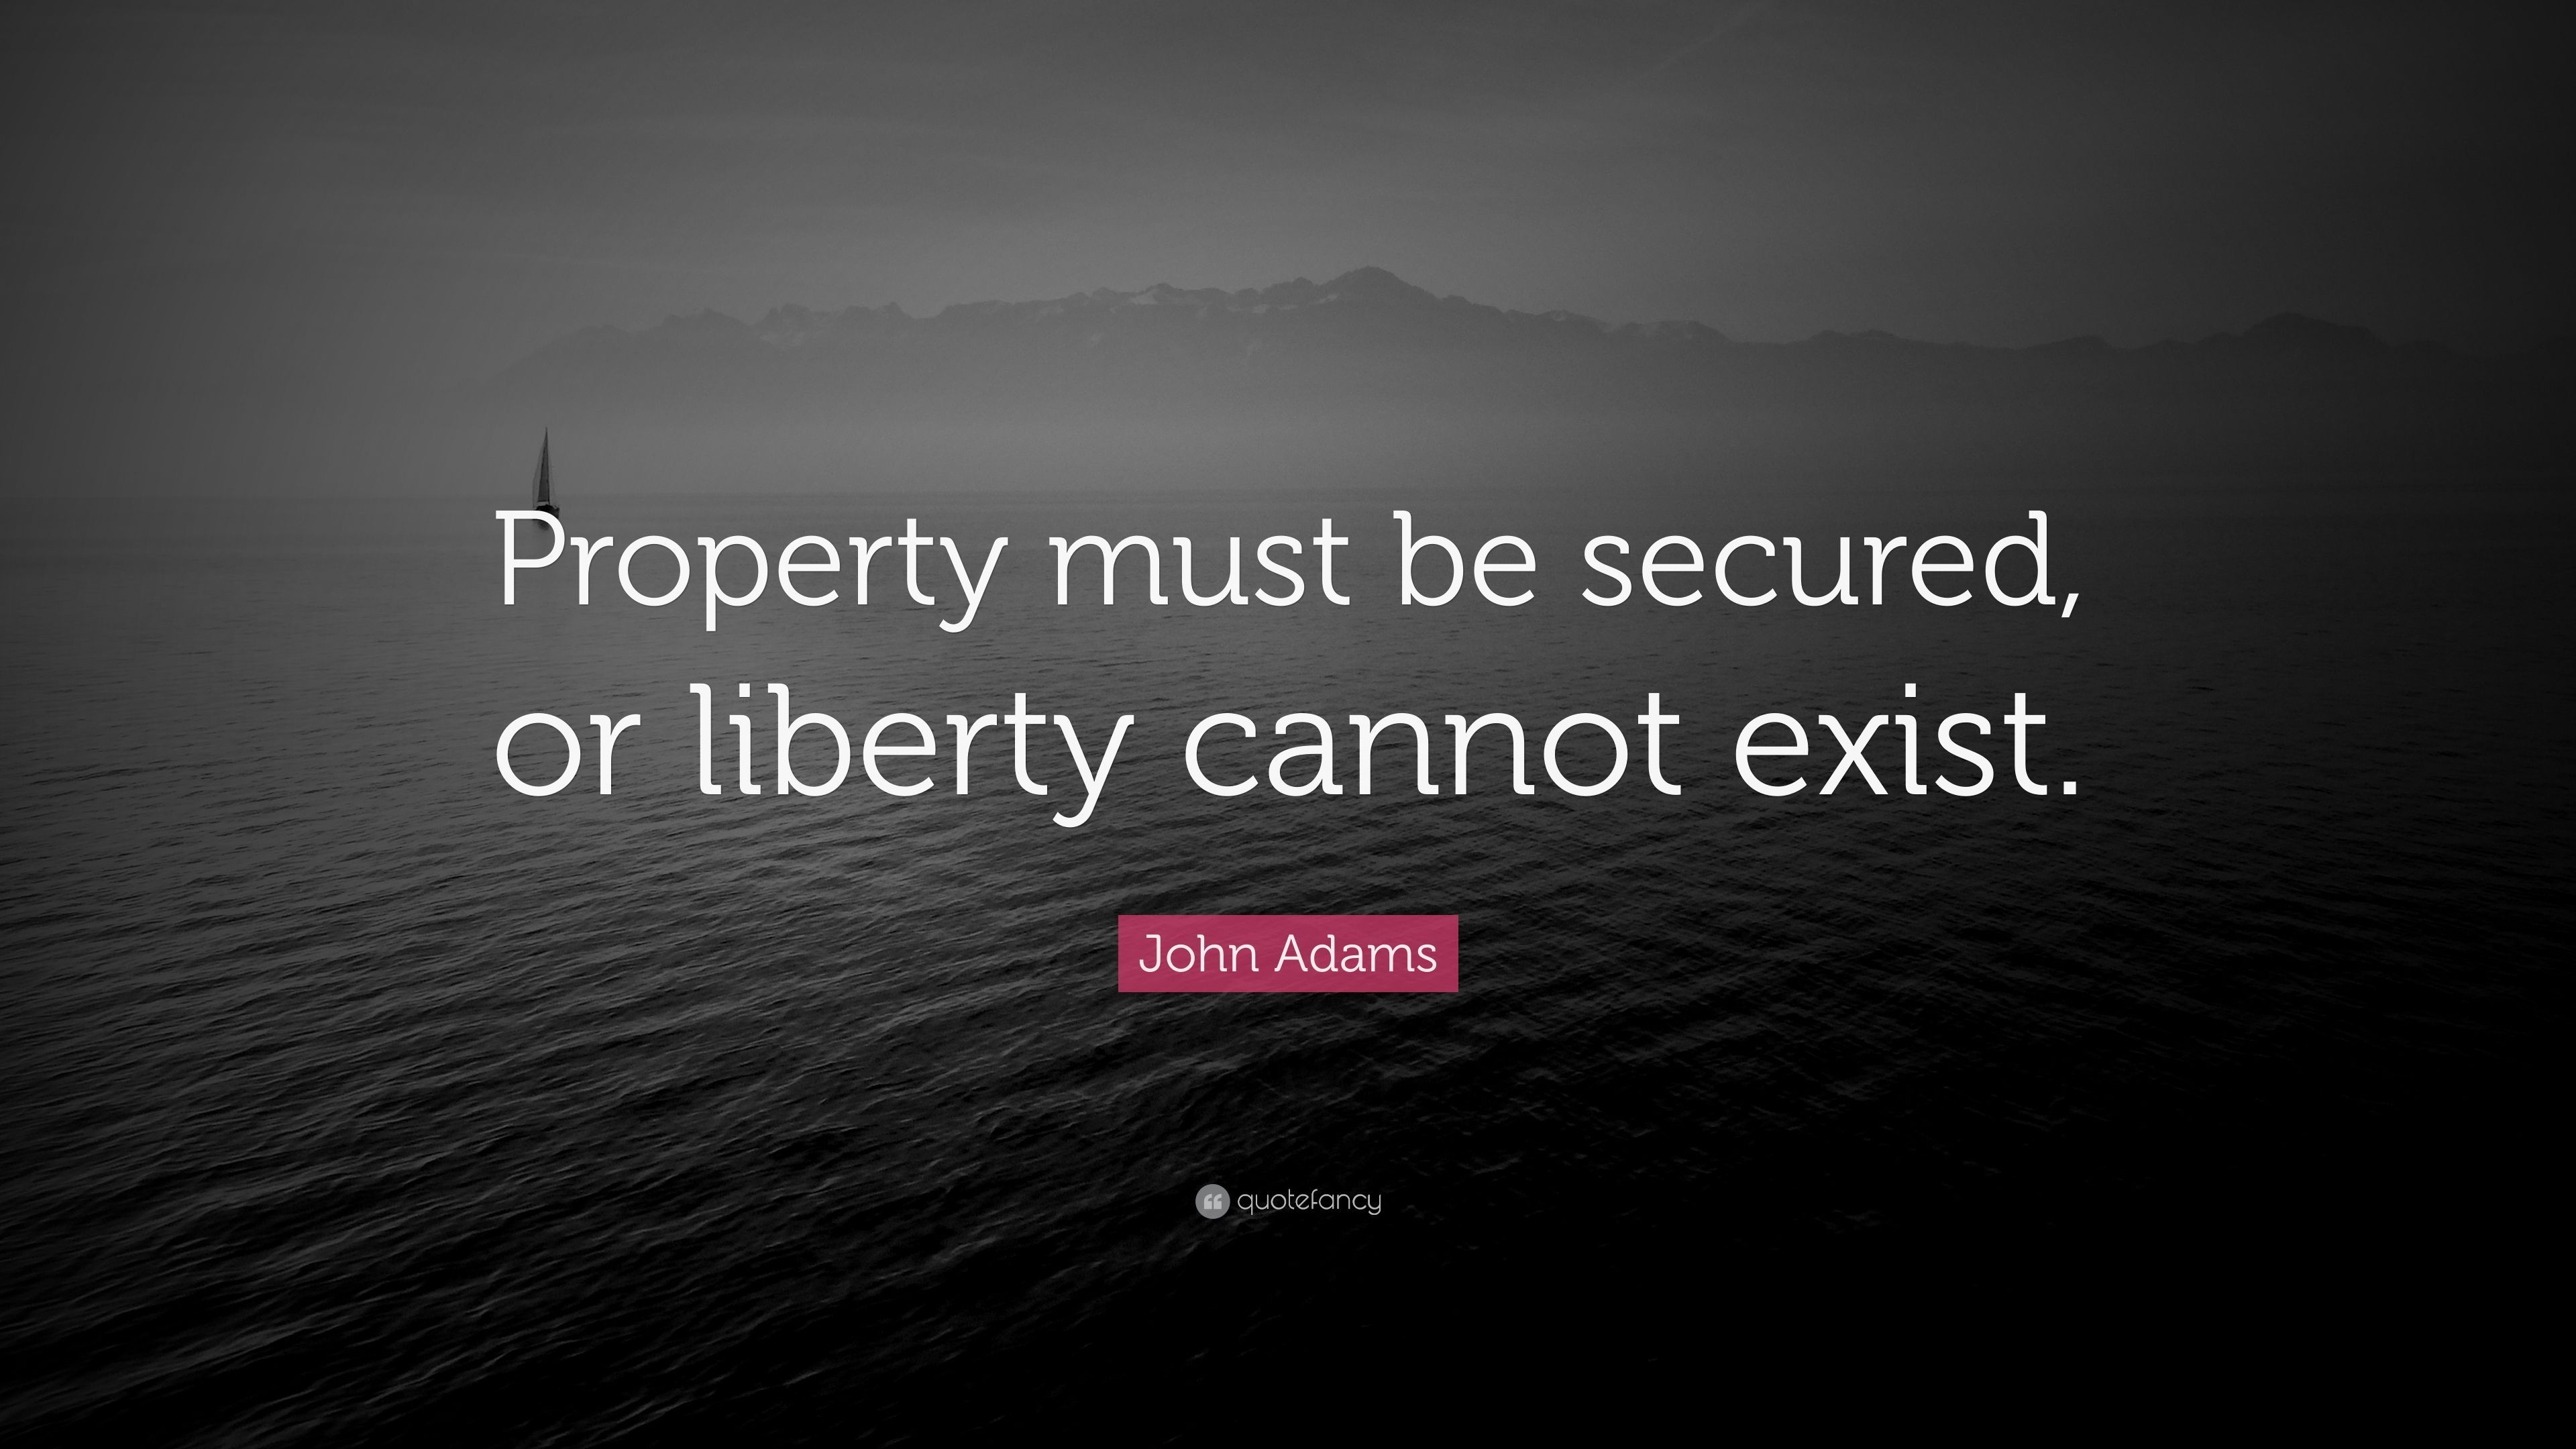 John Adams Quote: “Property must be .quotefancy.com